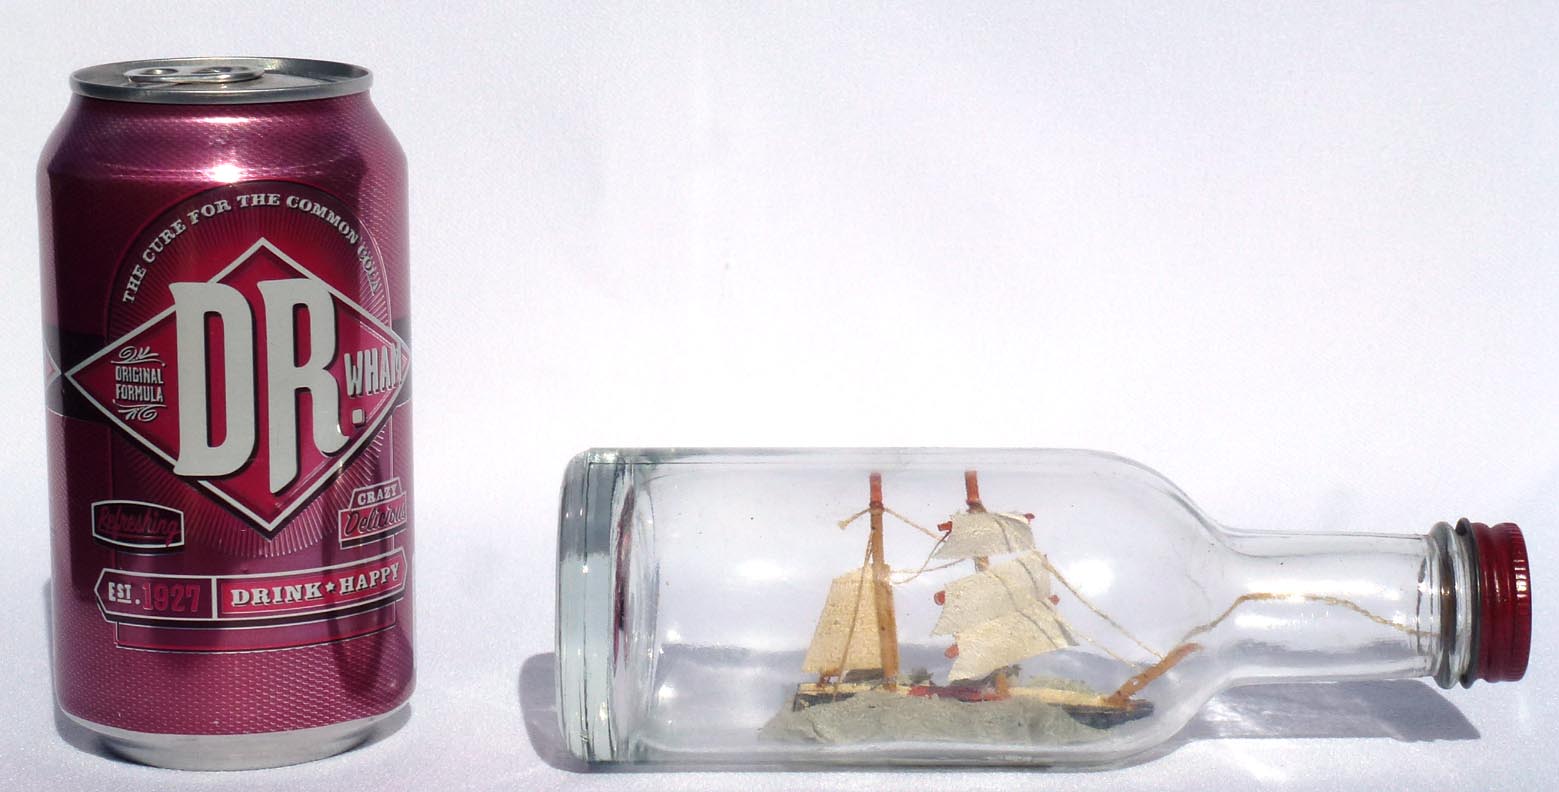 Ship in bottle whimsy